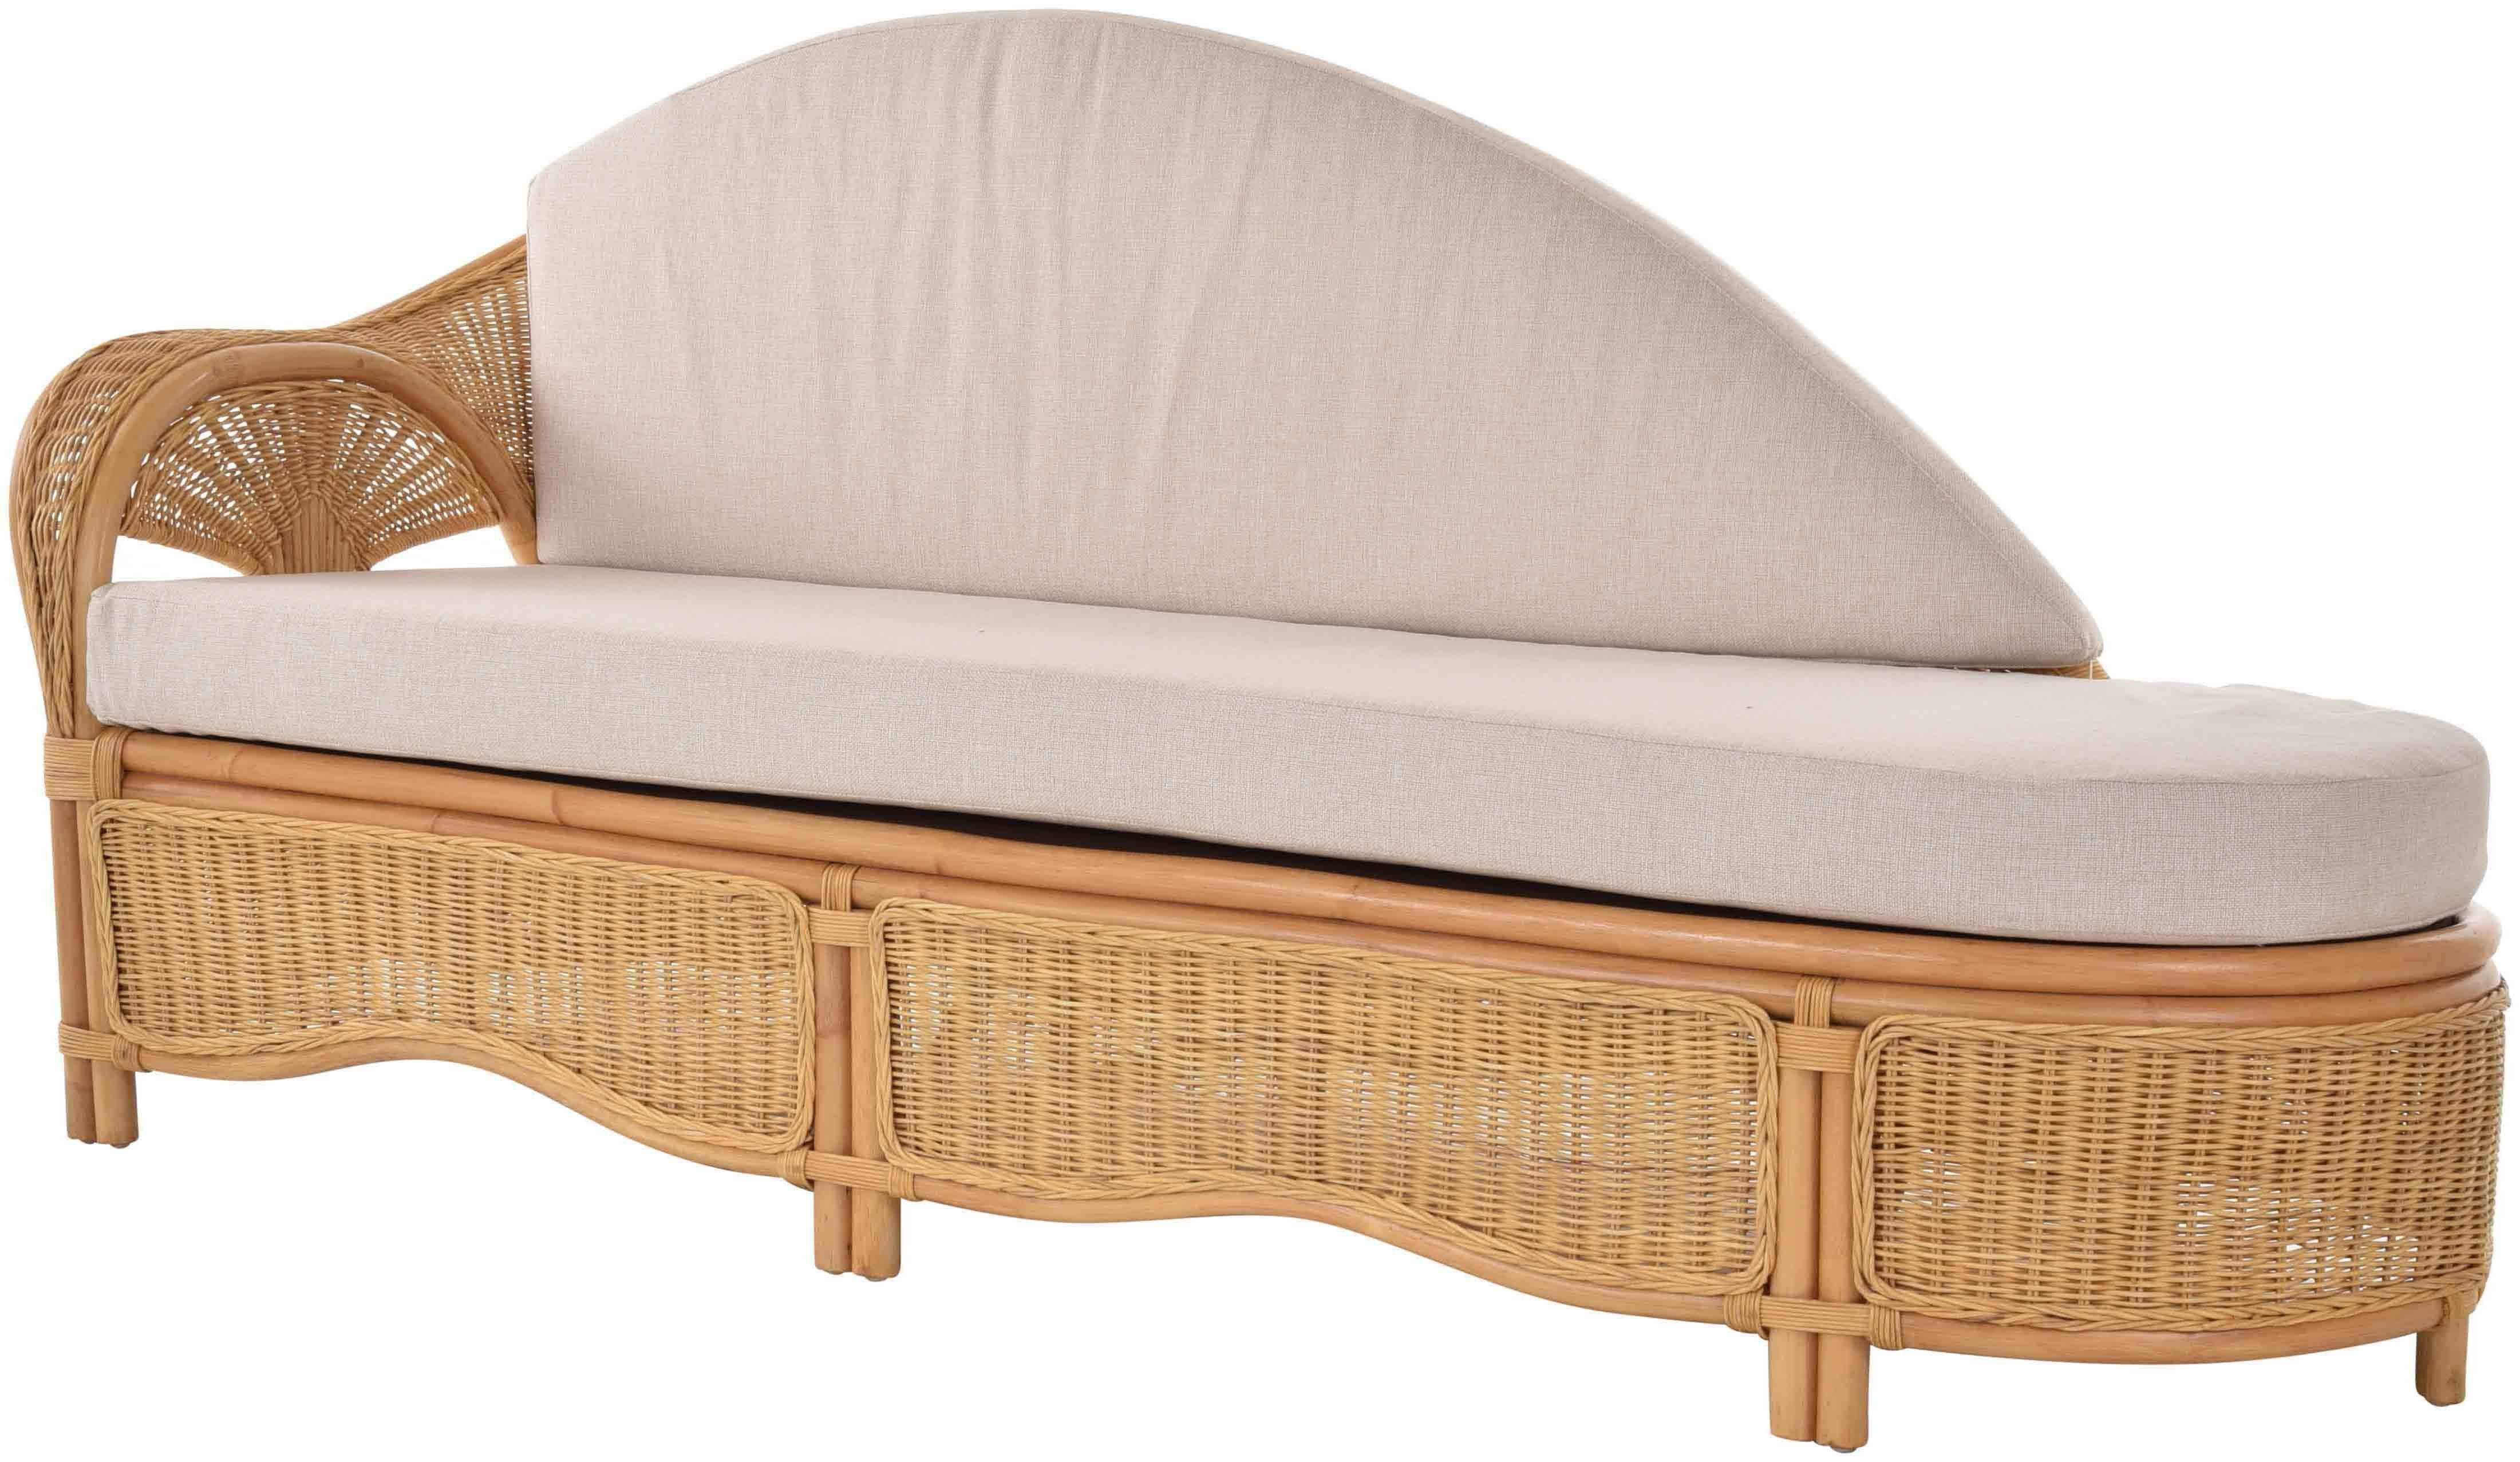 Krines Rattanmöbel Links, mit Rattan Home Chaiselongue Palm Polster, Liege Honig Lounge Recamiere Recamiere Rattanliege